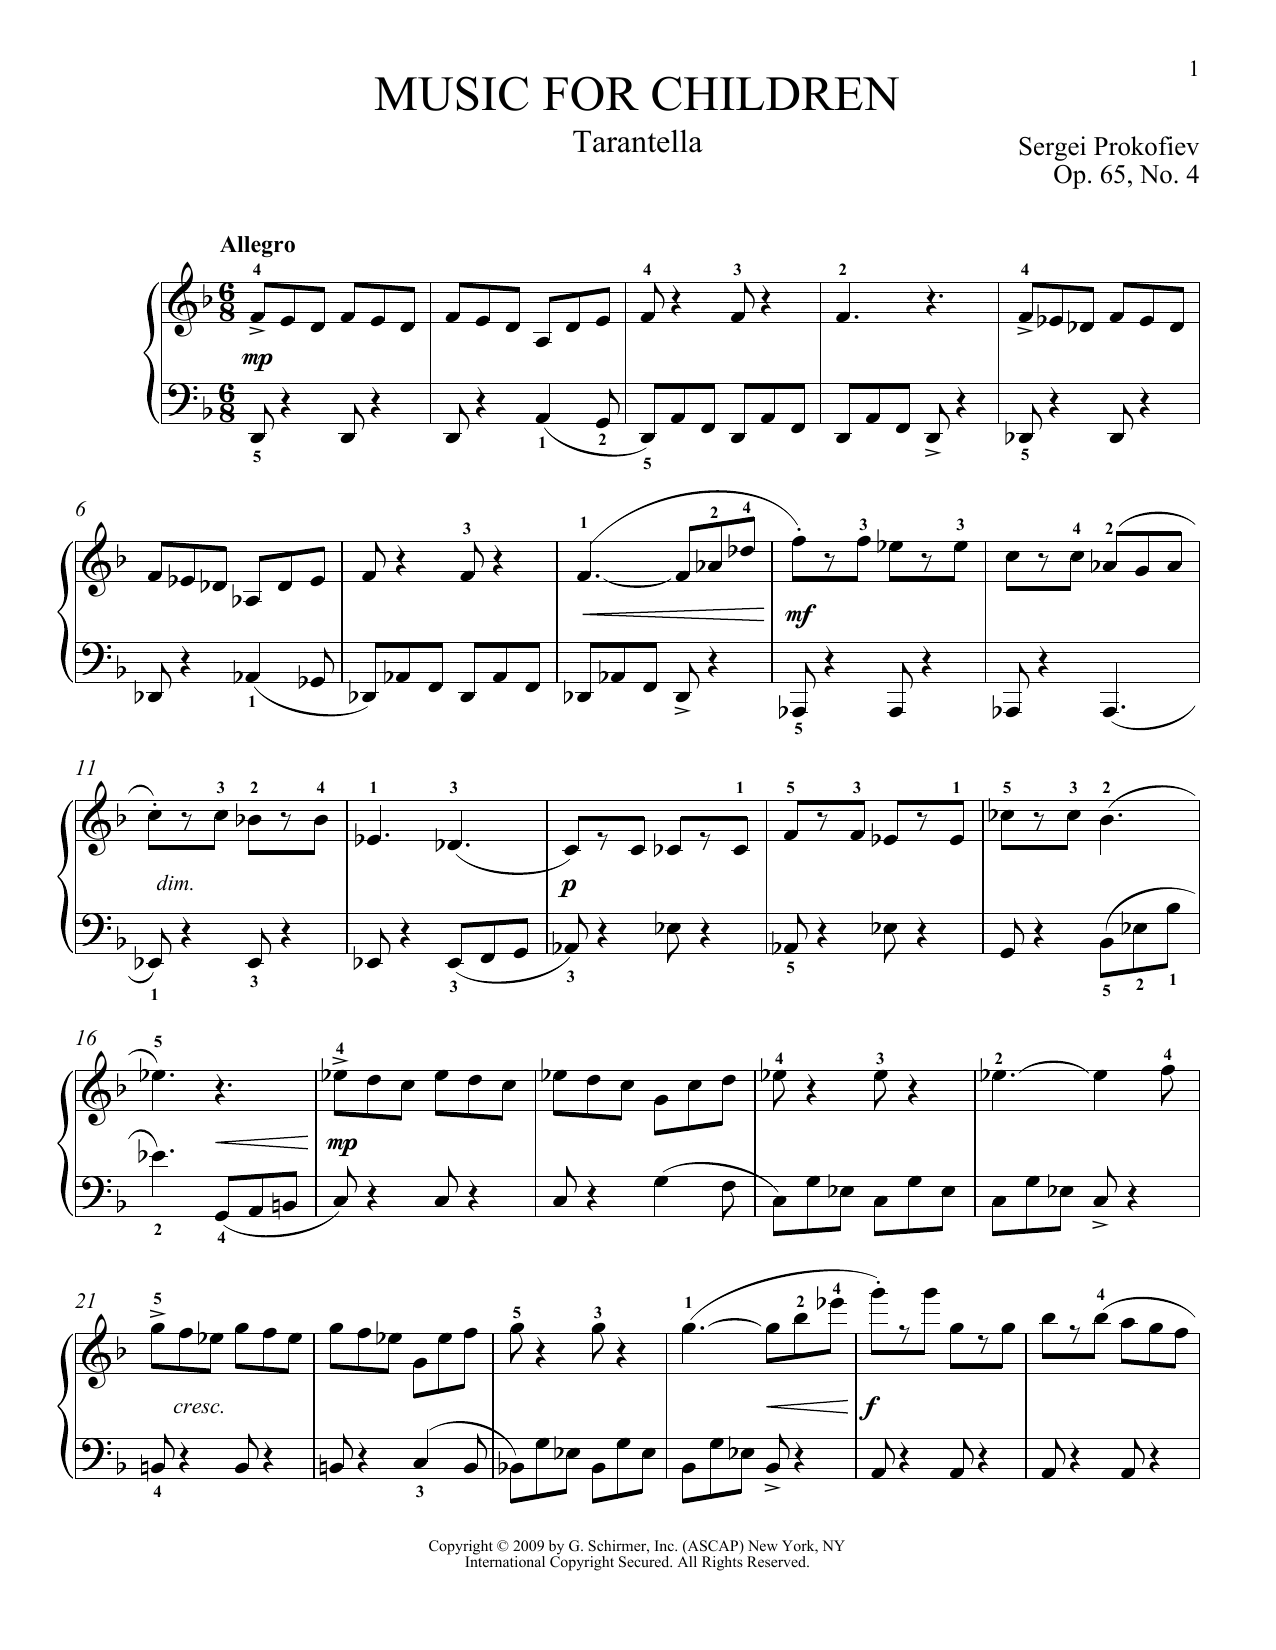 Sergei Prokofiev Tarantella Sheet Music Notes & Chords for Piano - Download or Print PDF